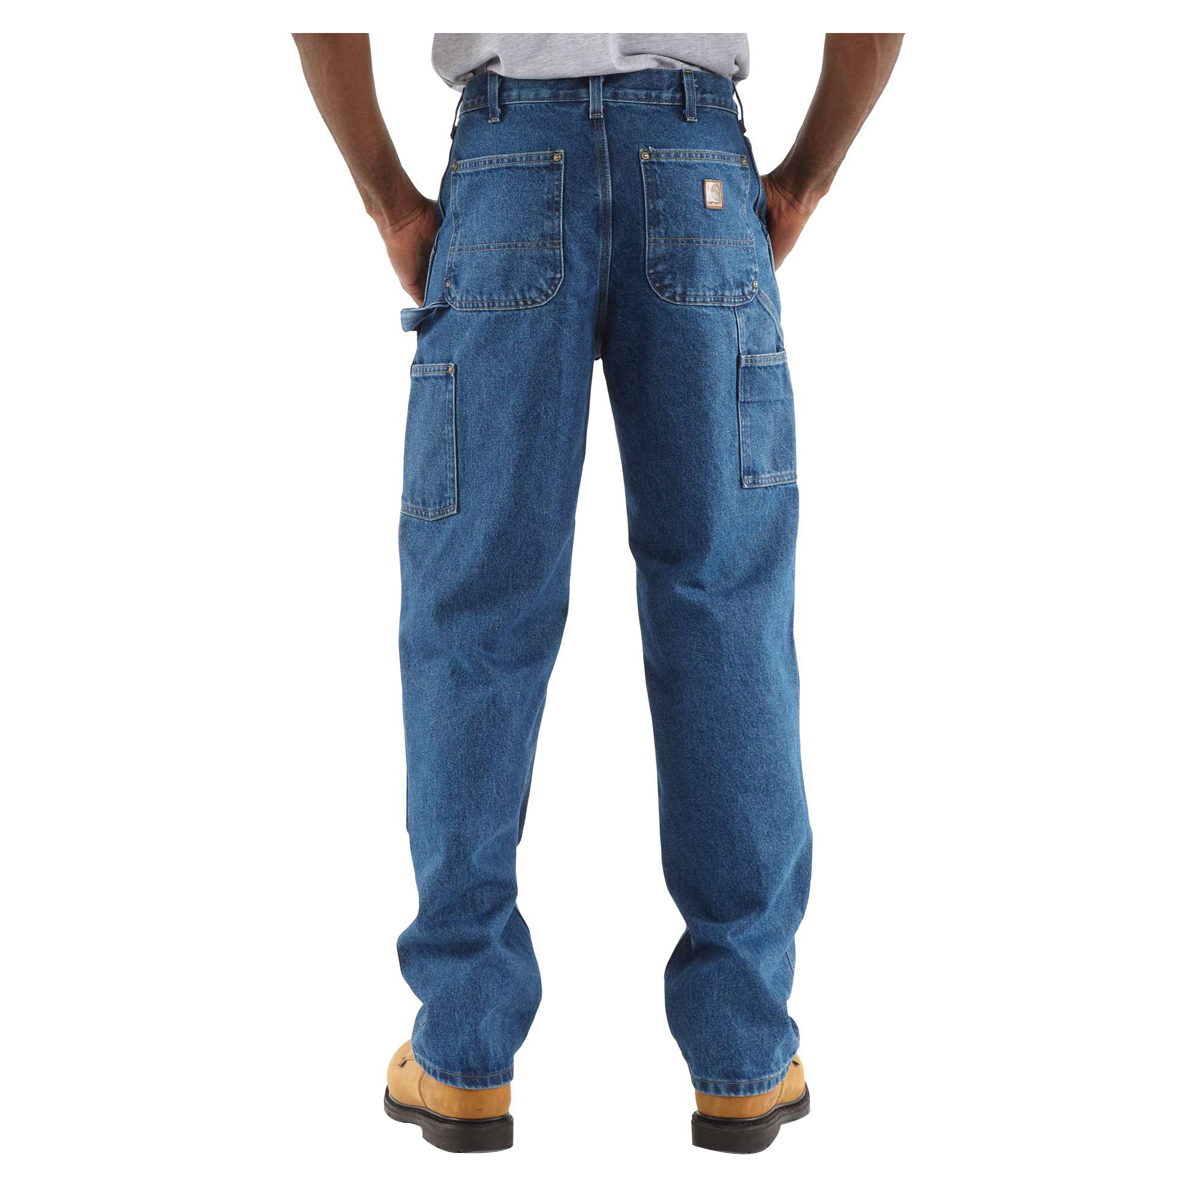 Carhartt B73-DST-32X30 Utility Logger Jeans, 32 in Waist, 30 in L Inseam, Darkstone, Loose Fit - 6